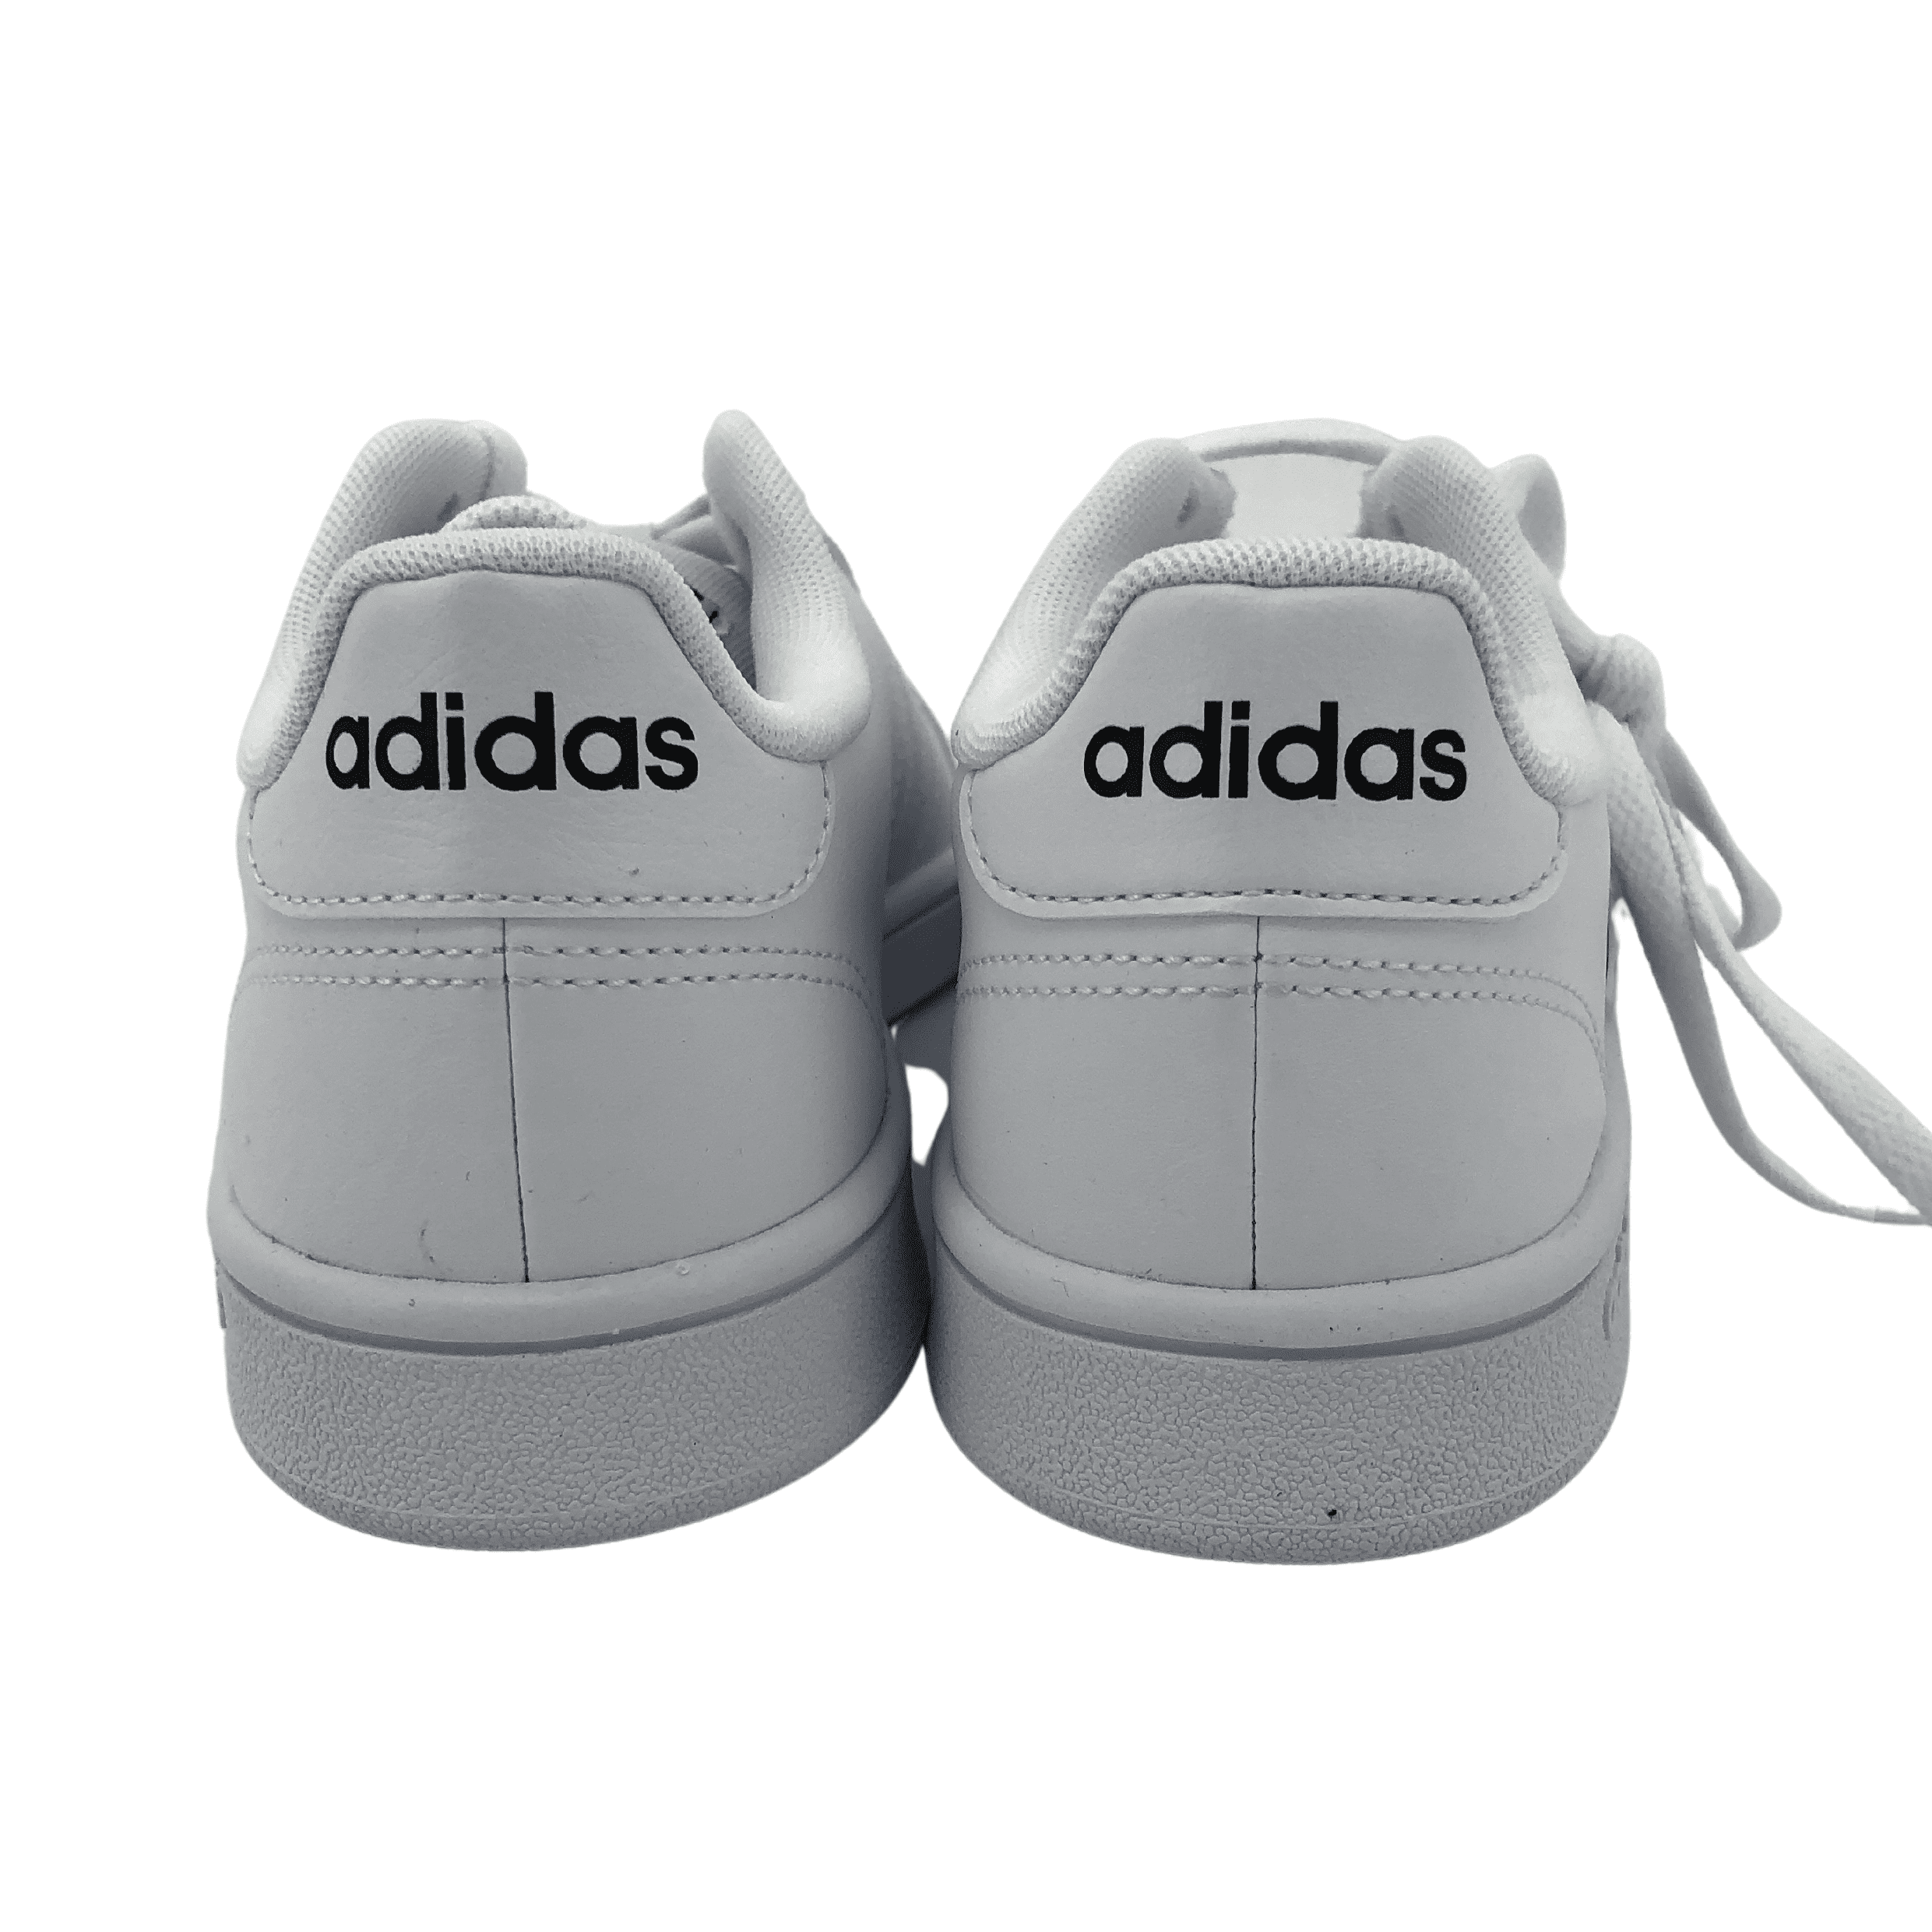 Adidas Women's Sneaker / Grand Court Base / White w/ Classic Black Stripes / Size 6